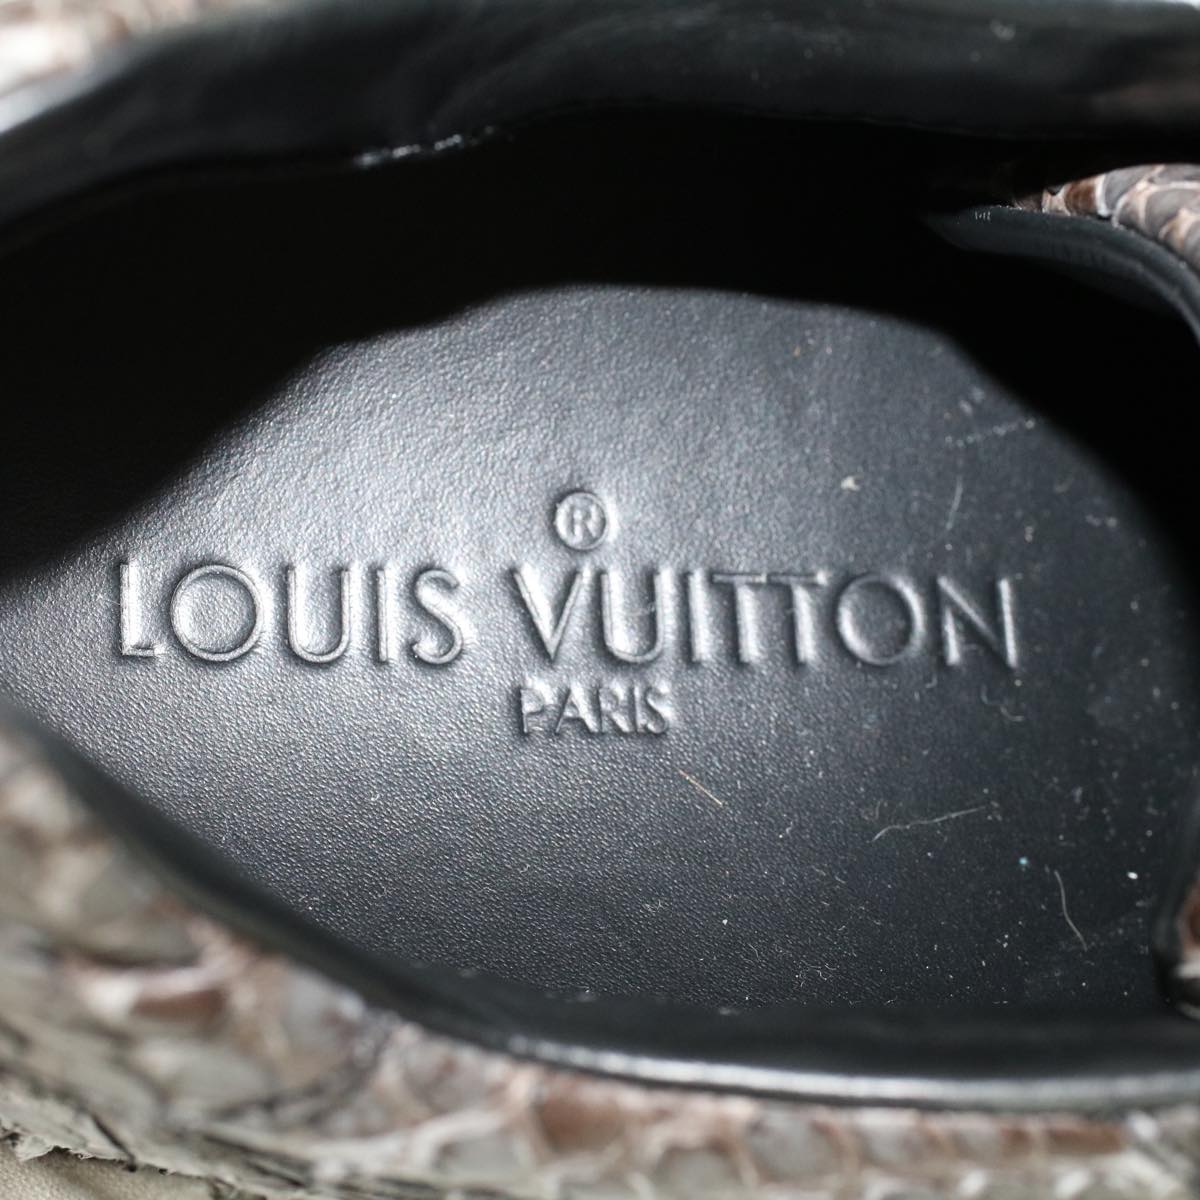 LOUIS VUITTON Sneakers Exotic Leather 6 Black LV Auth ak202